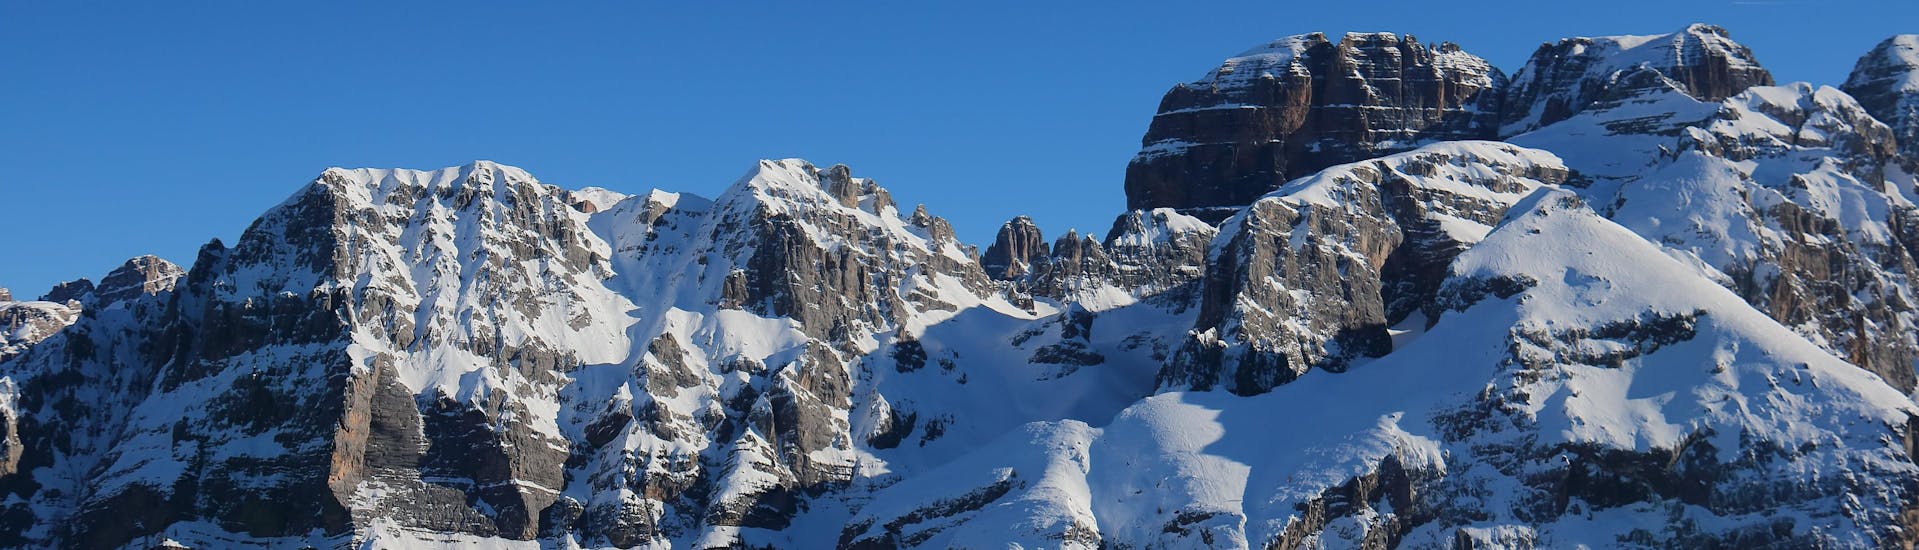 View of the alpine landscape of the ski resort Pinzolo in Val Rendena, where local ski schools offer their ski lessons.